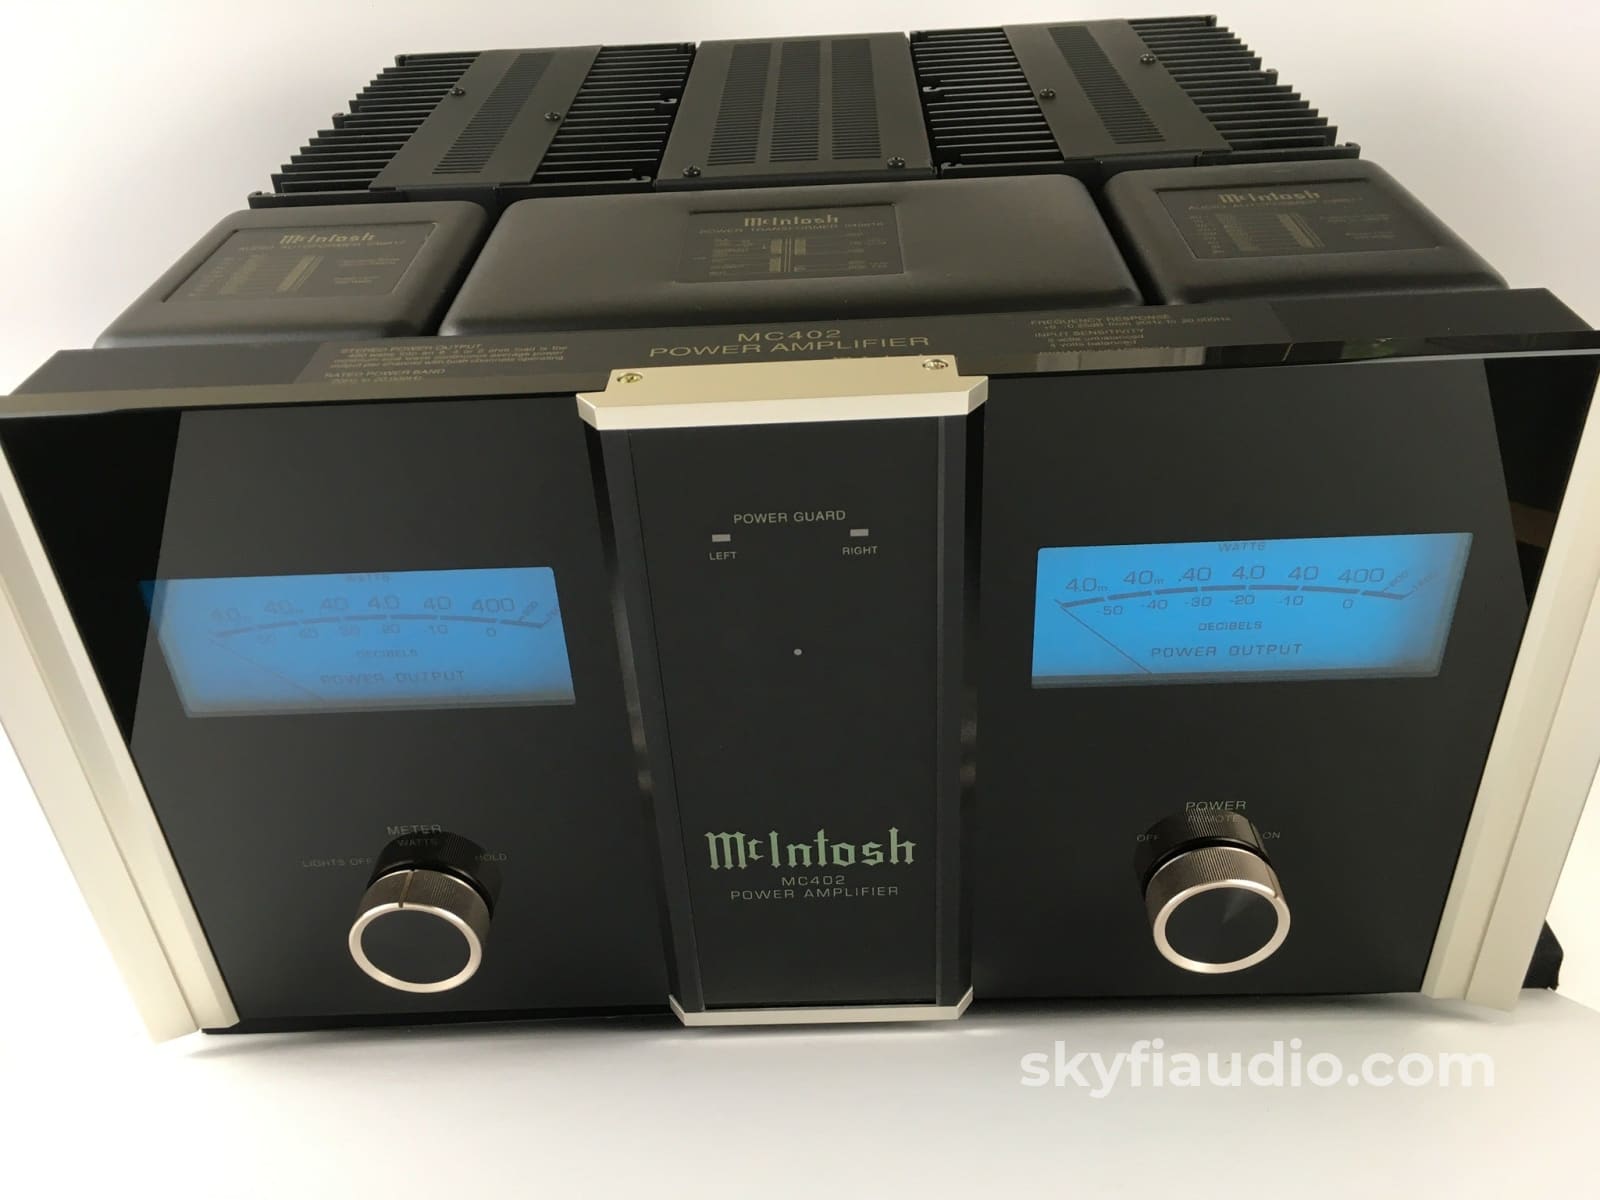 Mcintosh Mc-402 Solid State Amplifier